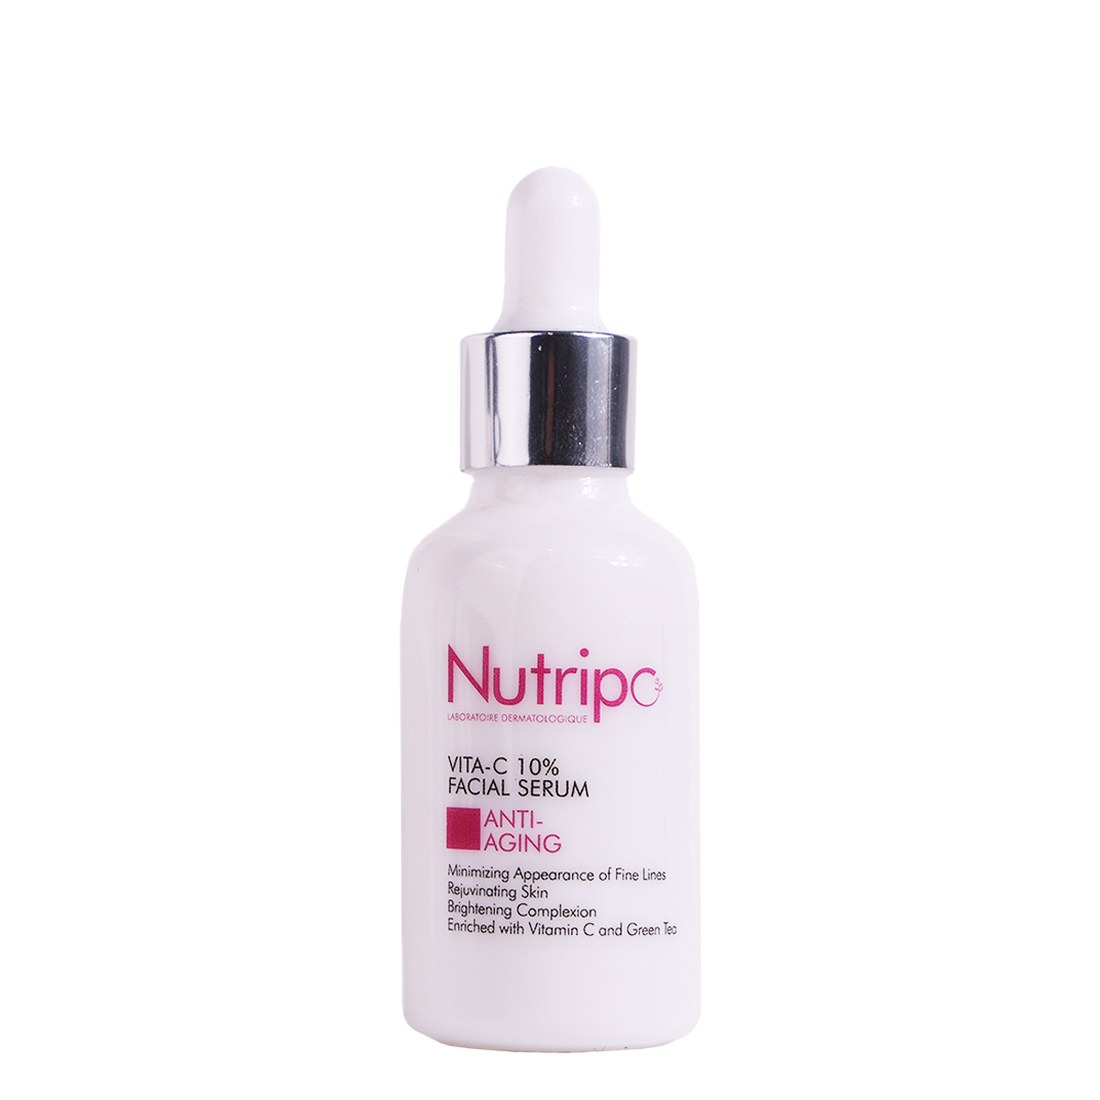 Vitamin C 10% Facial Serum 30 mL from Nutripo